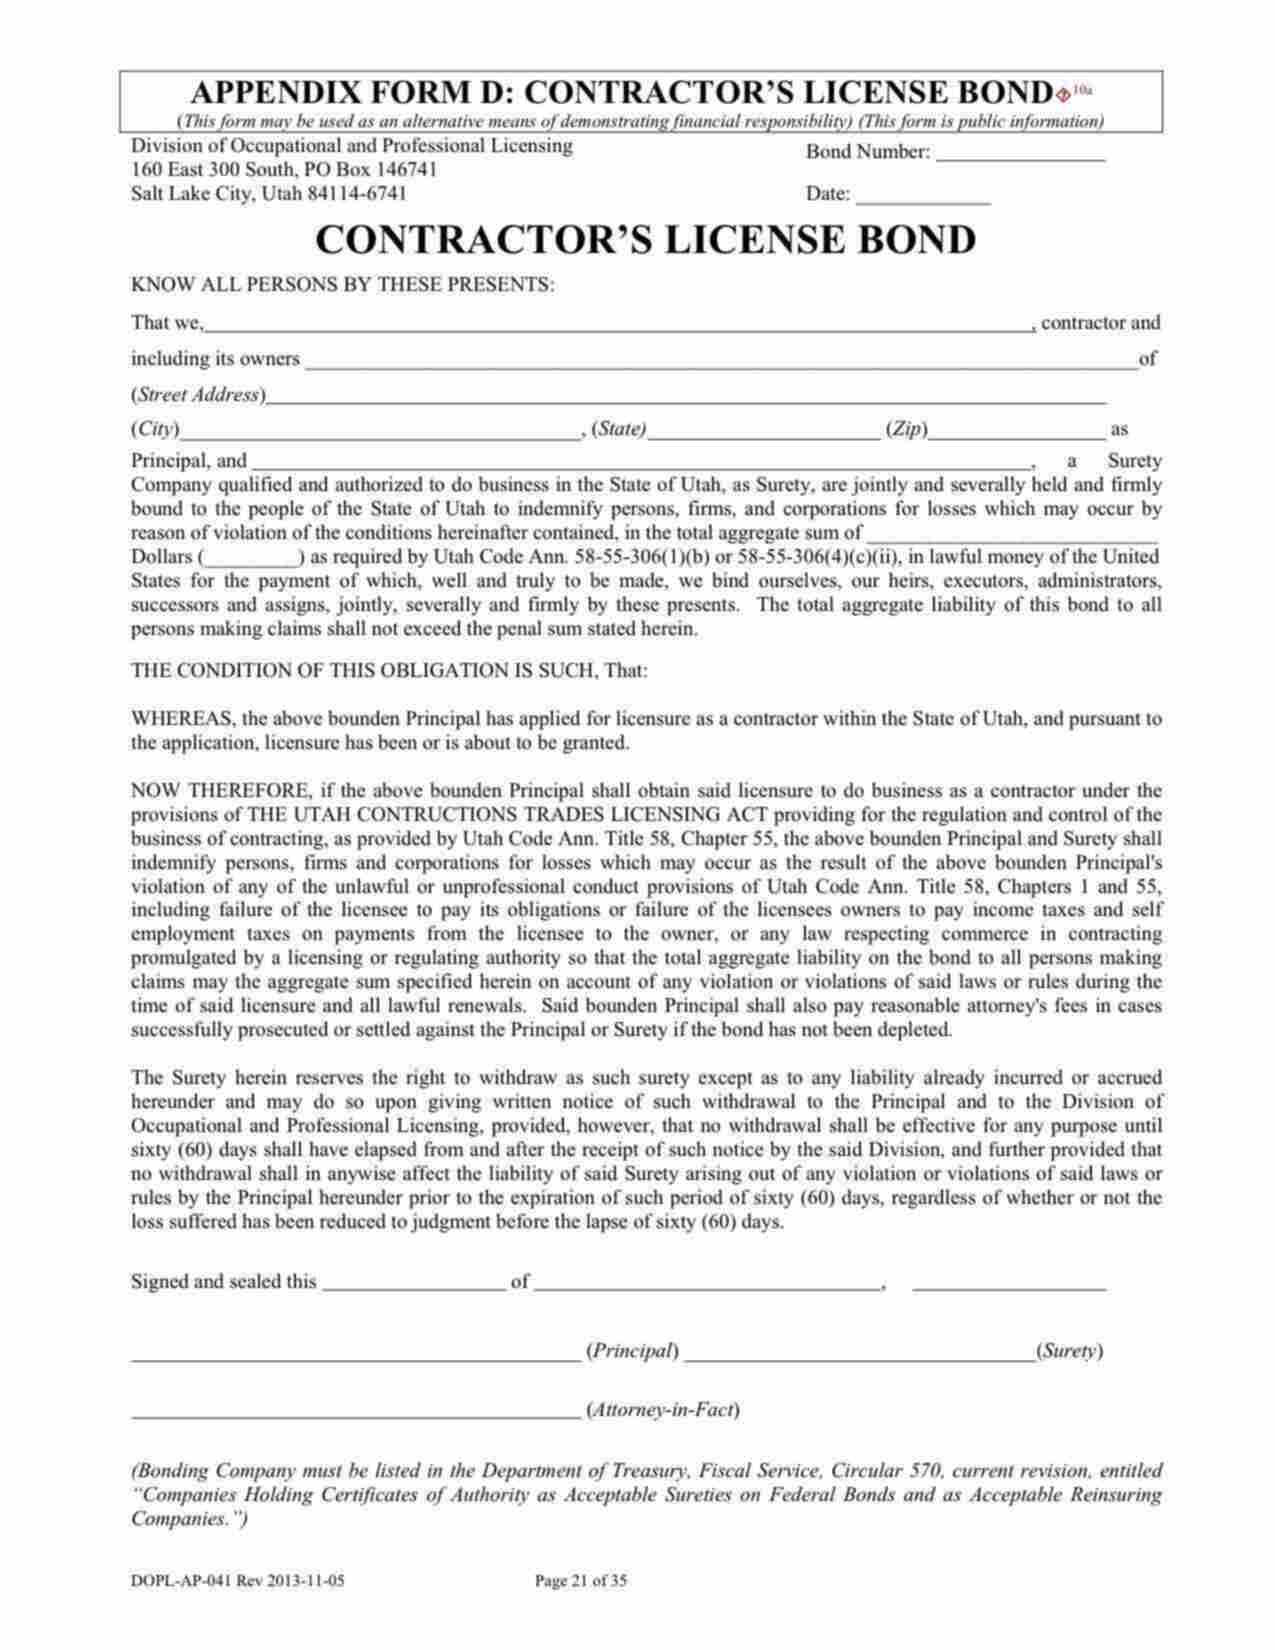 Utah Contractor's License Bond Form